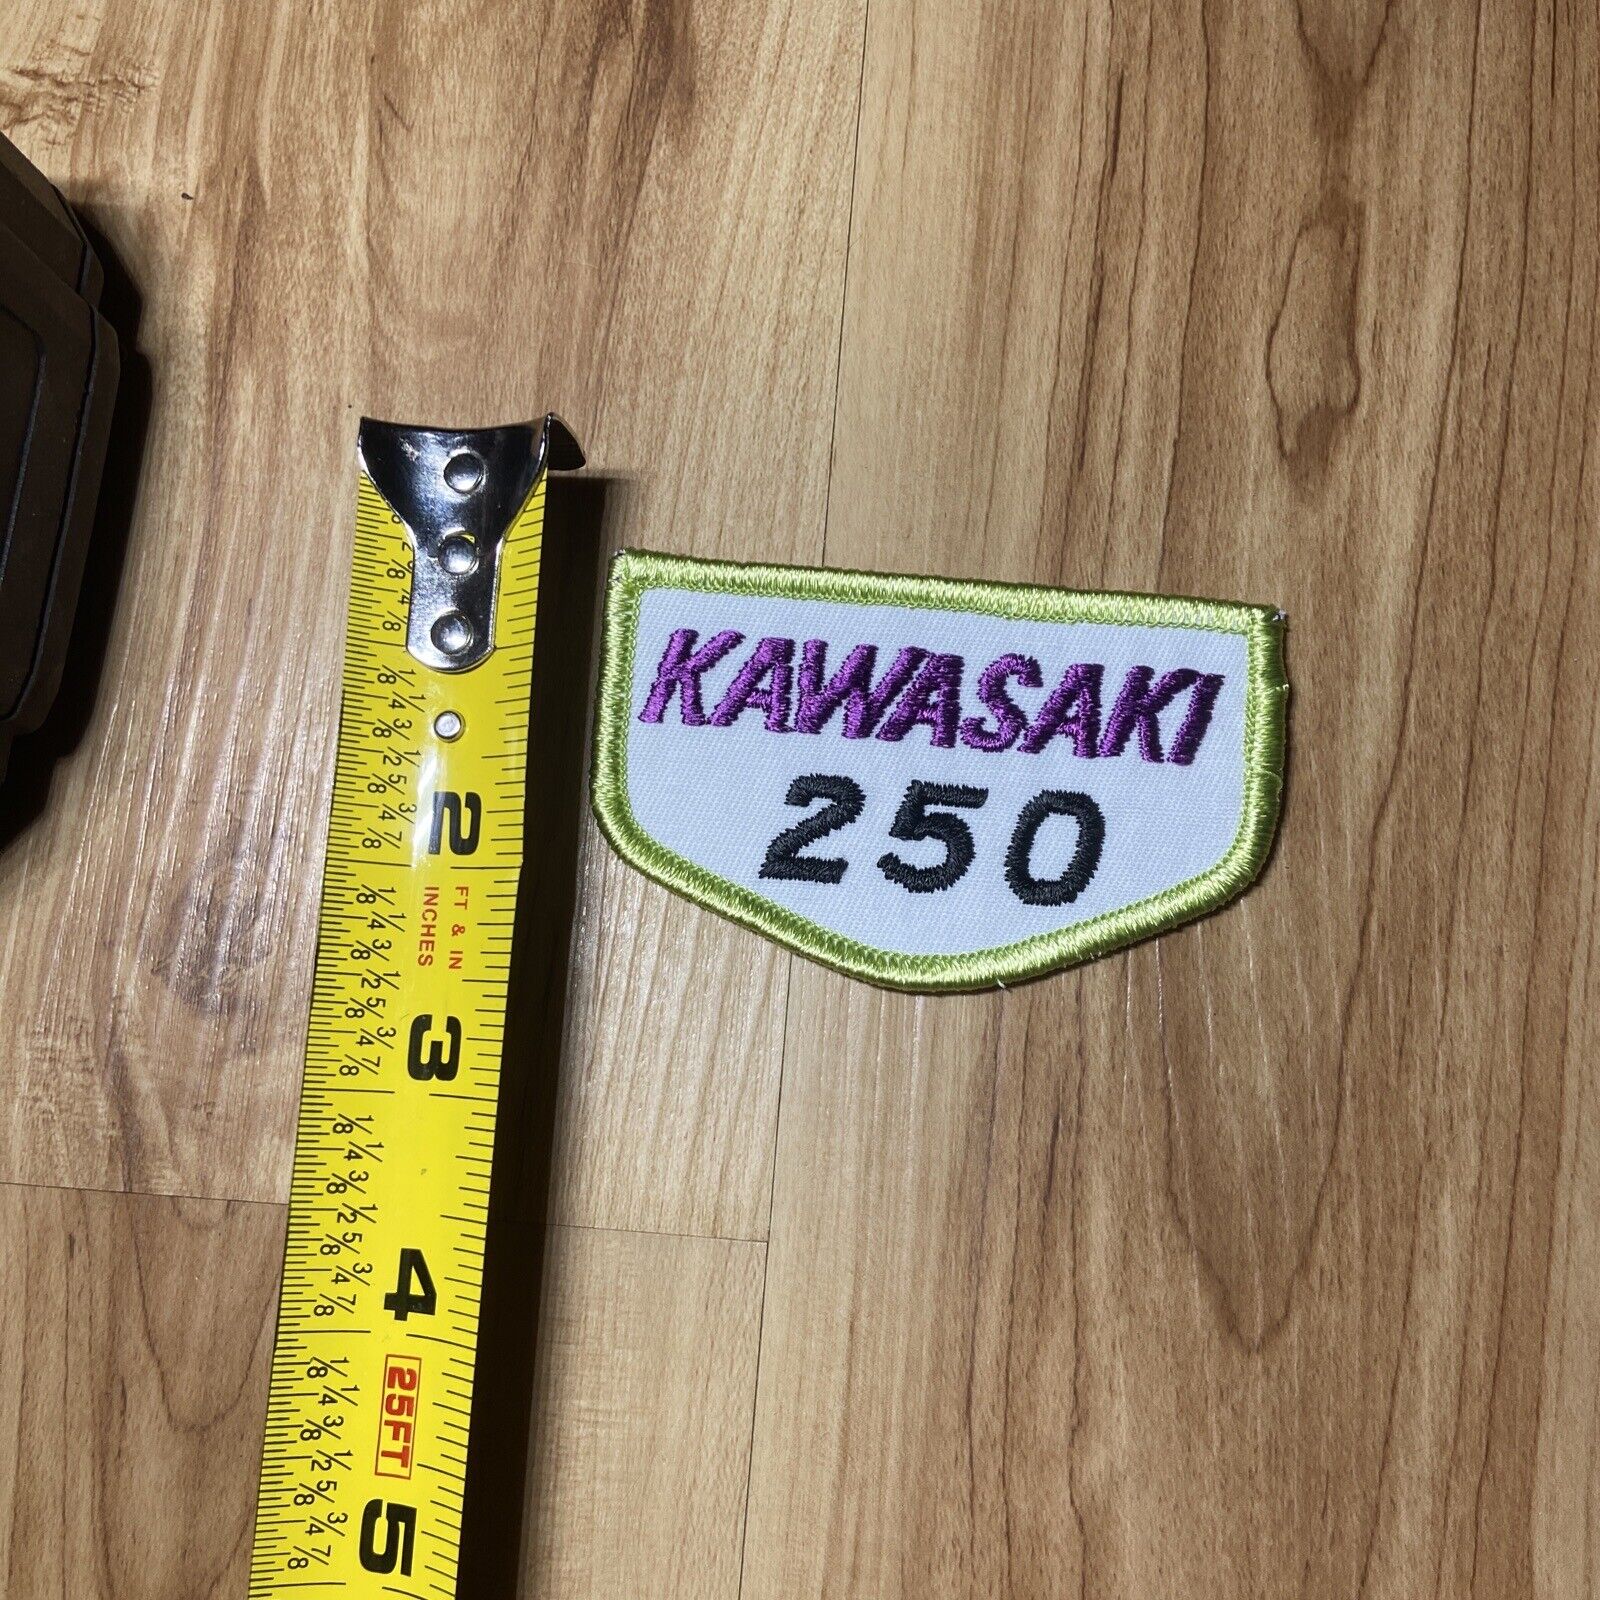 Kawasaki 250 Patch NOS Vintage